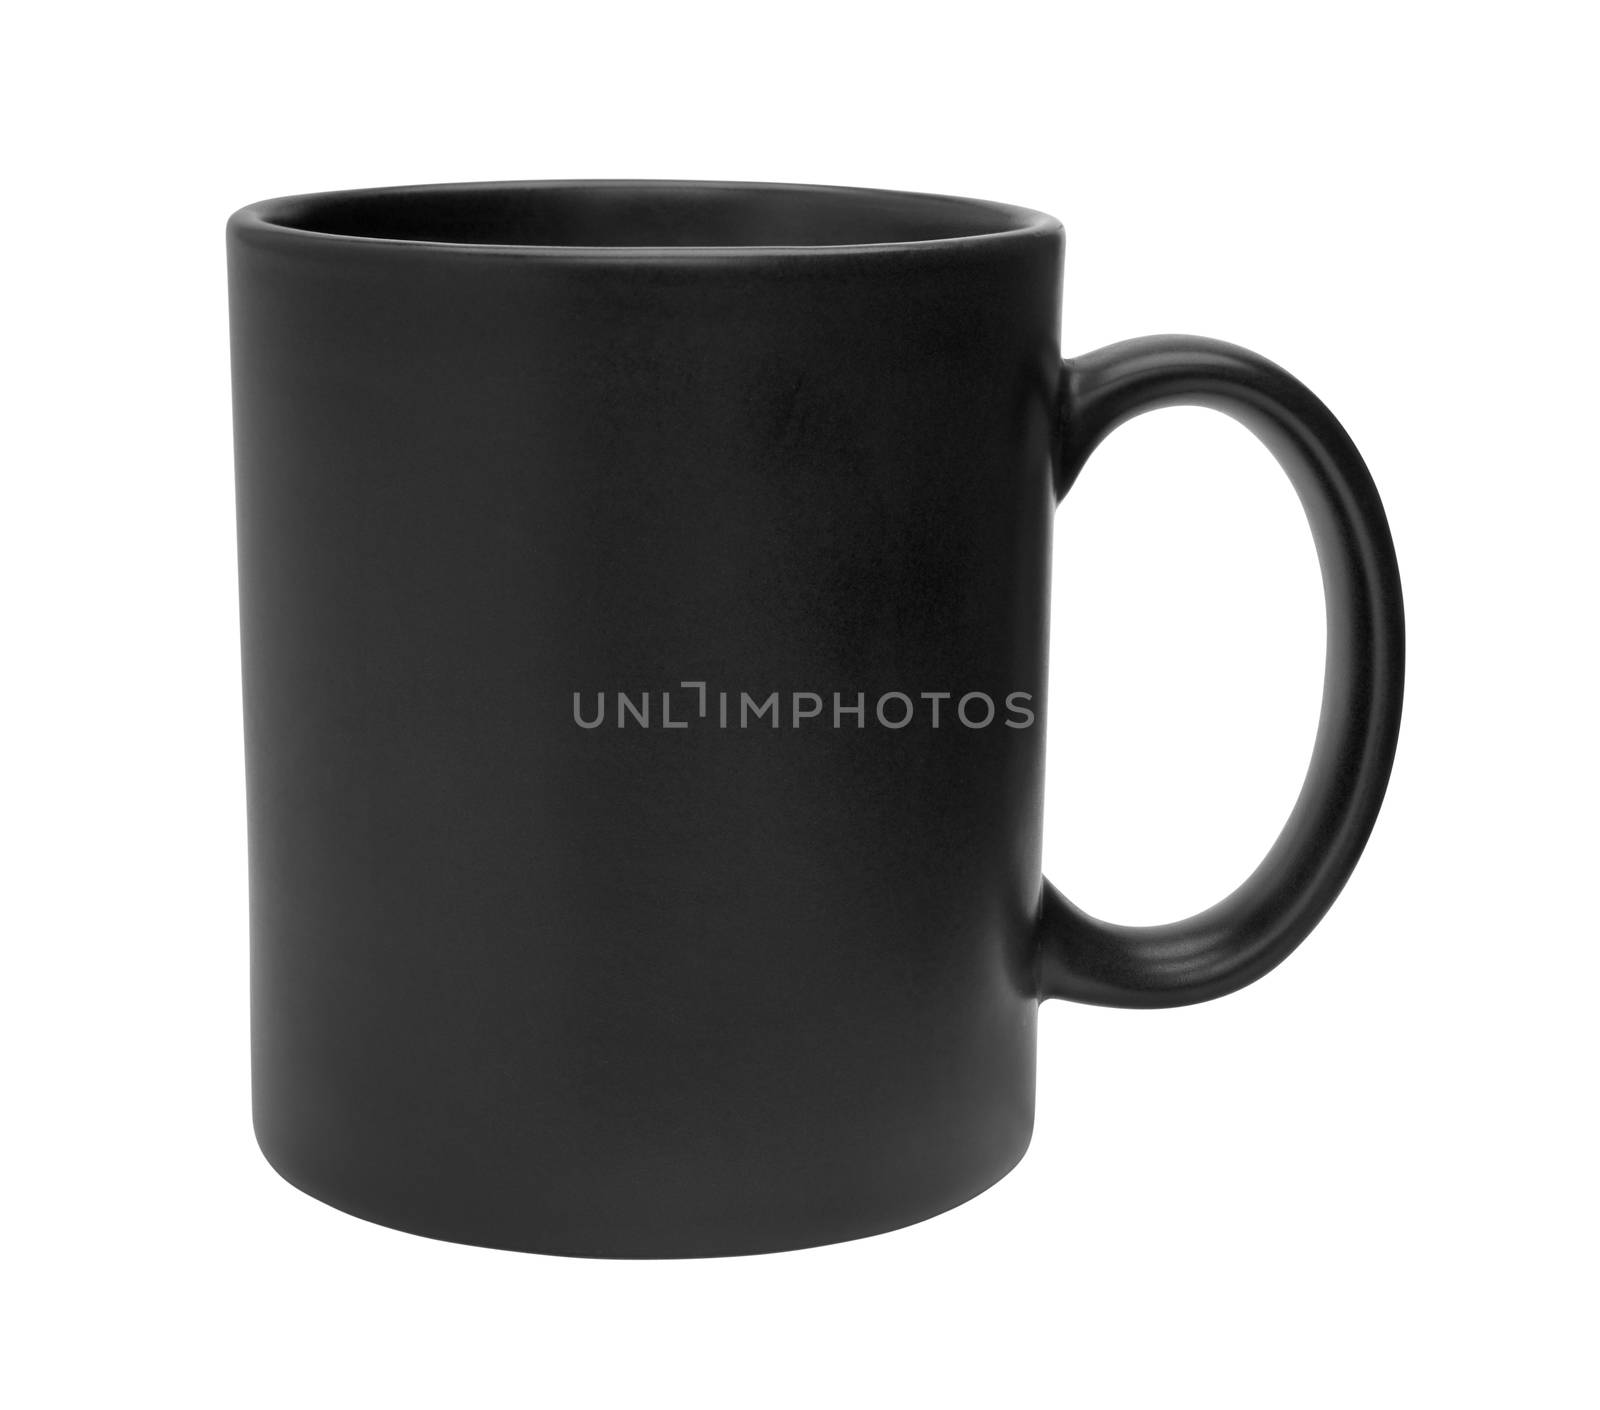 Black mug cutout by vkstudio